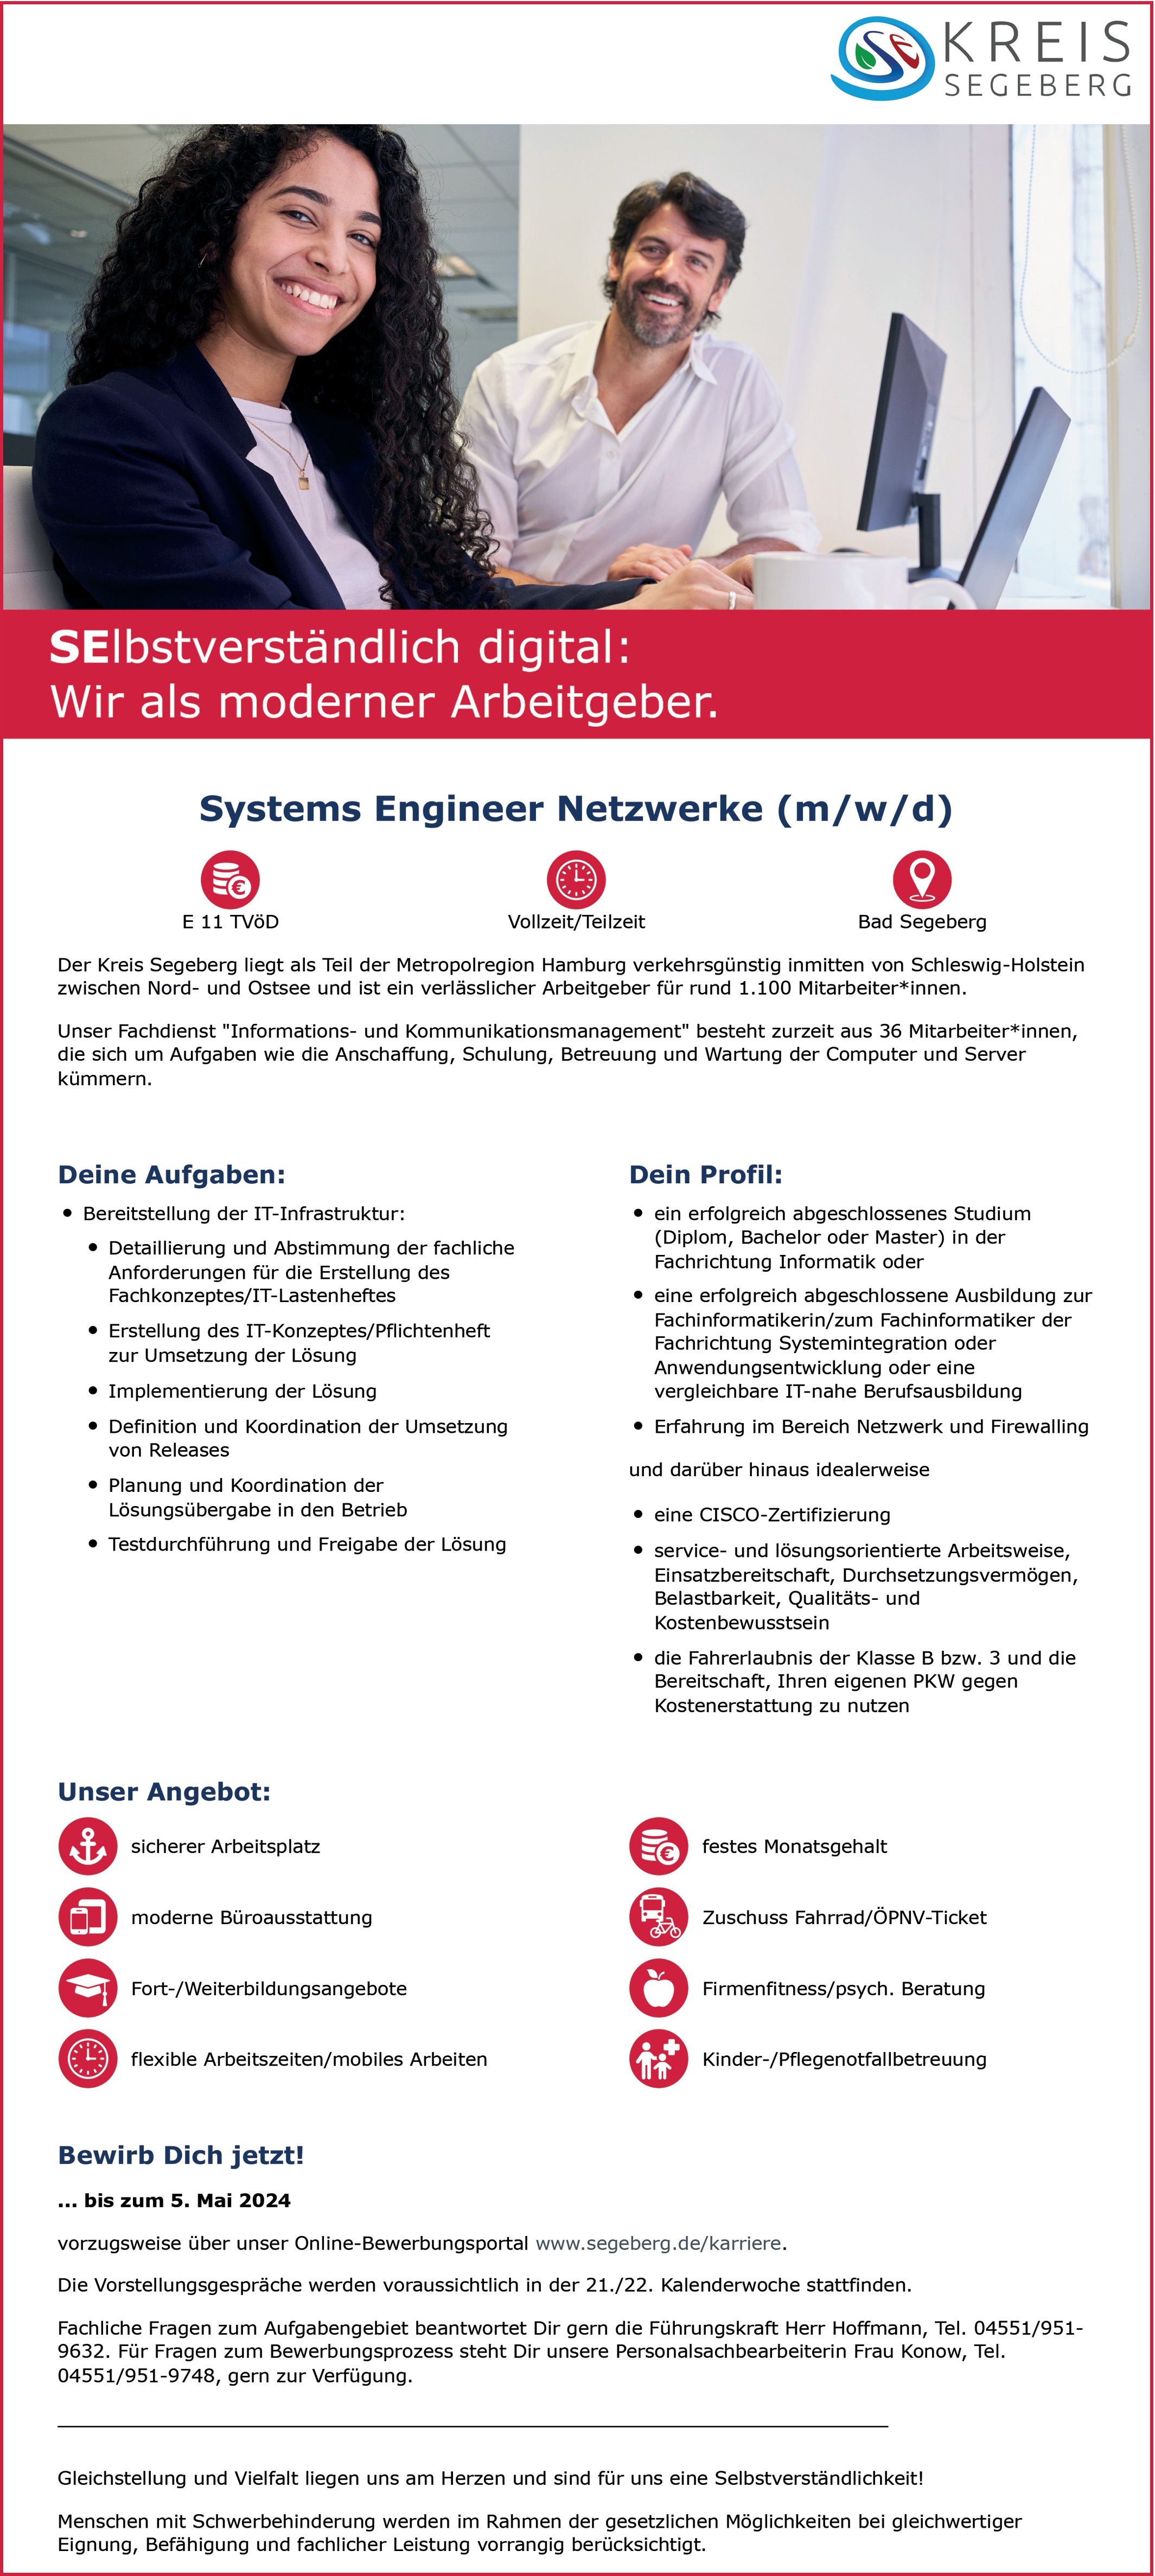 Systems Engineer Netzwerke (m/w/d)